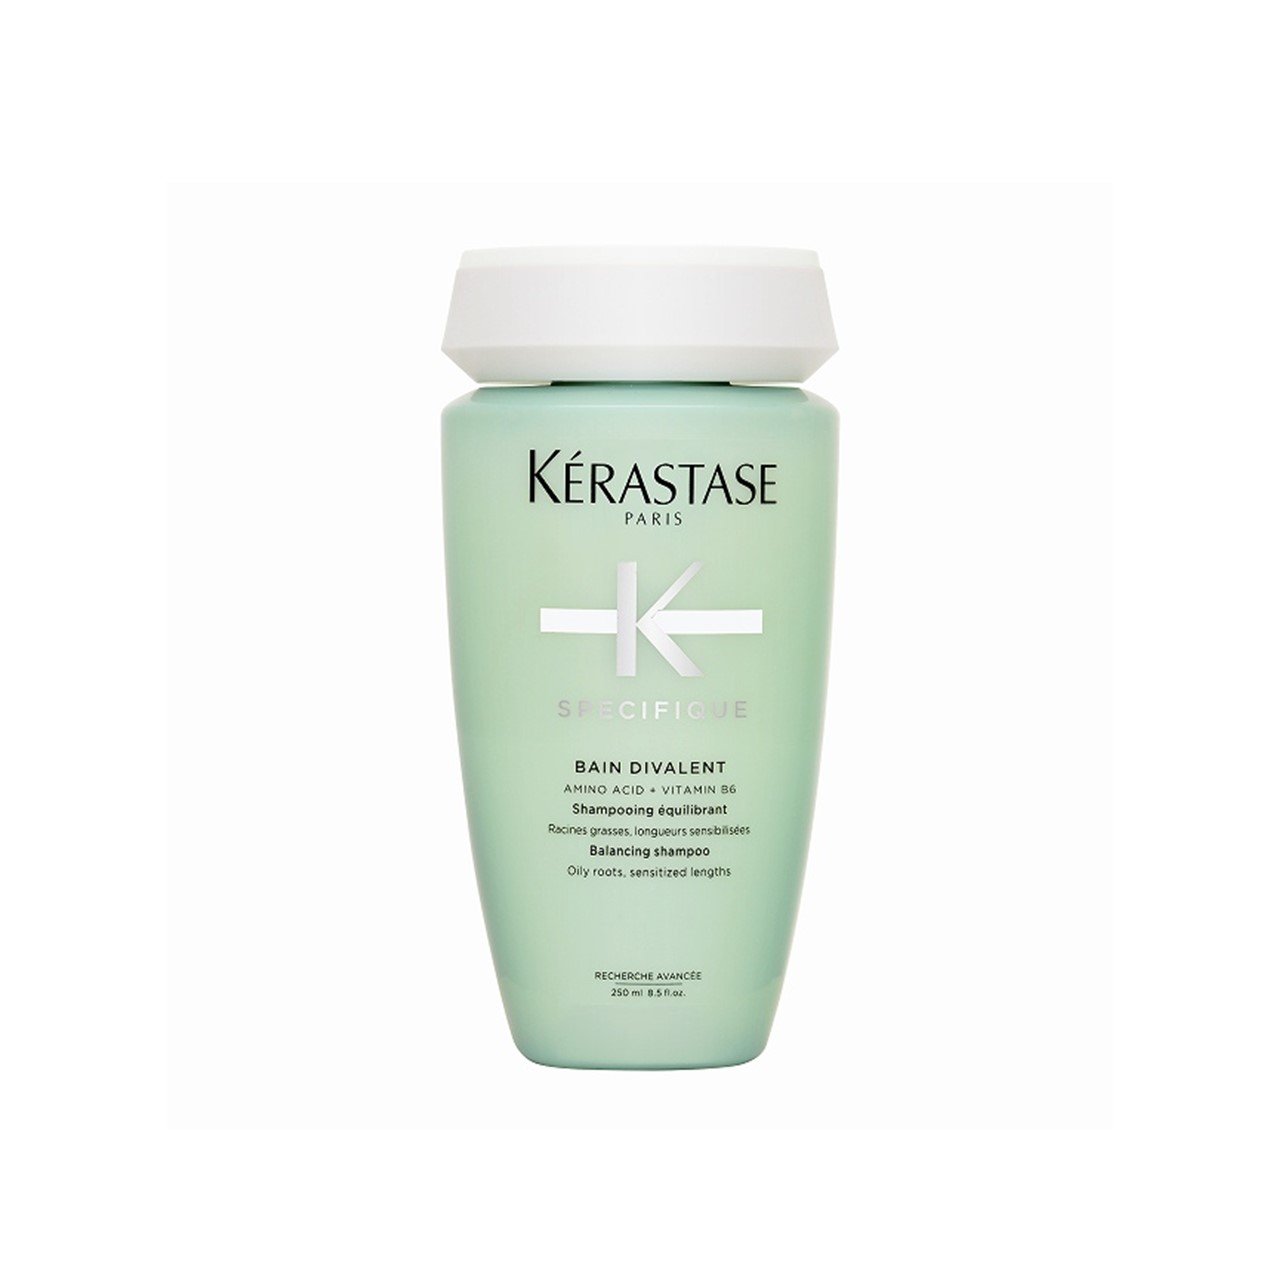 Kérastase Specifique Bain Divalent Balancing Shampoo 250ml (8.45fl oz)